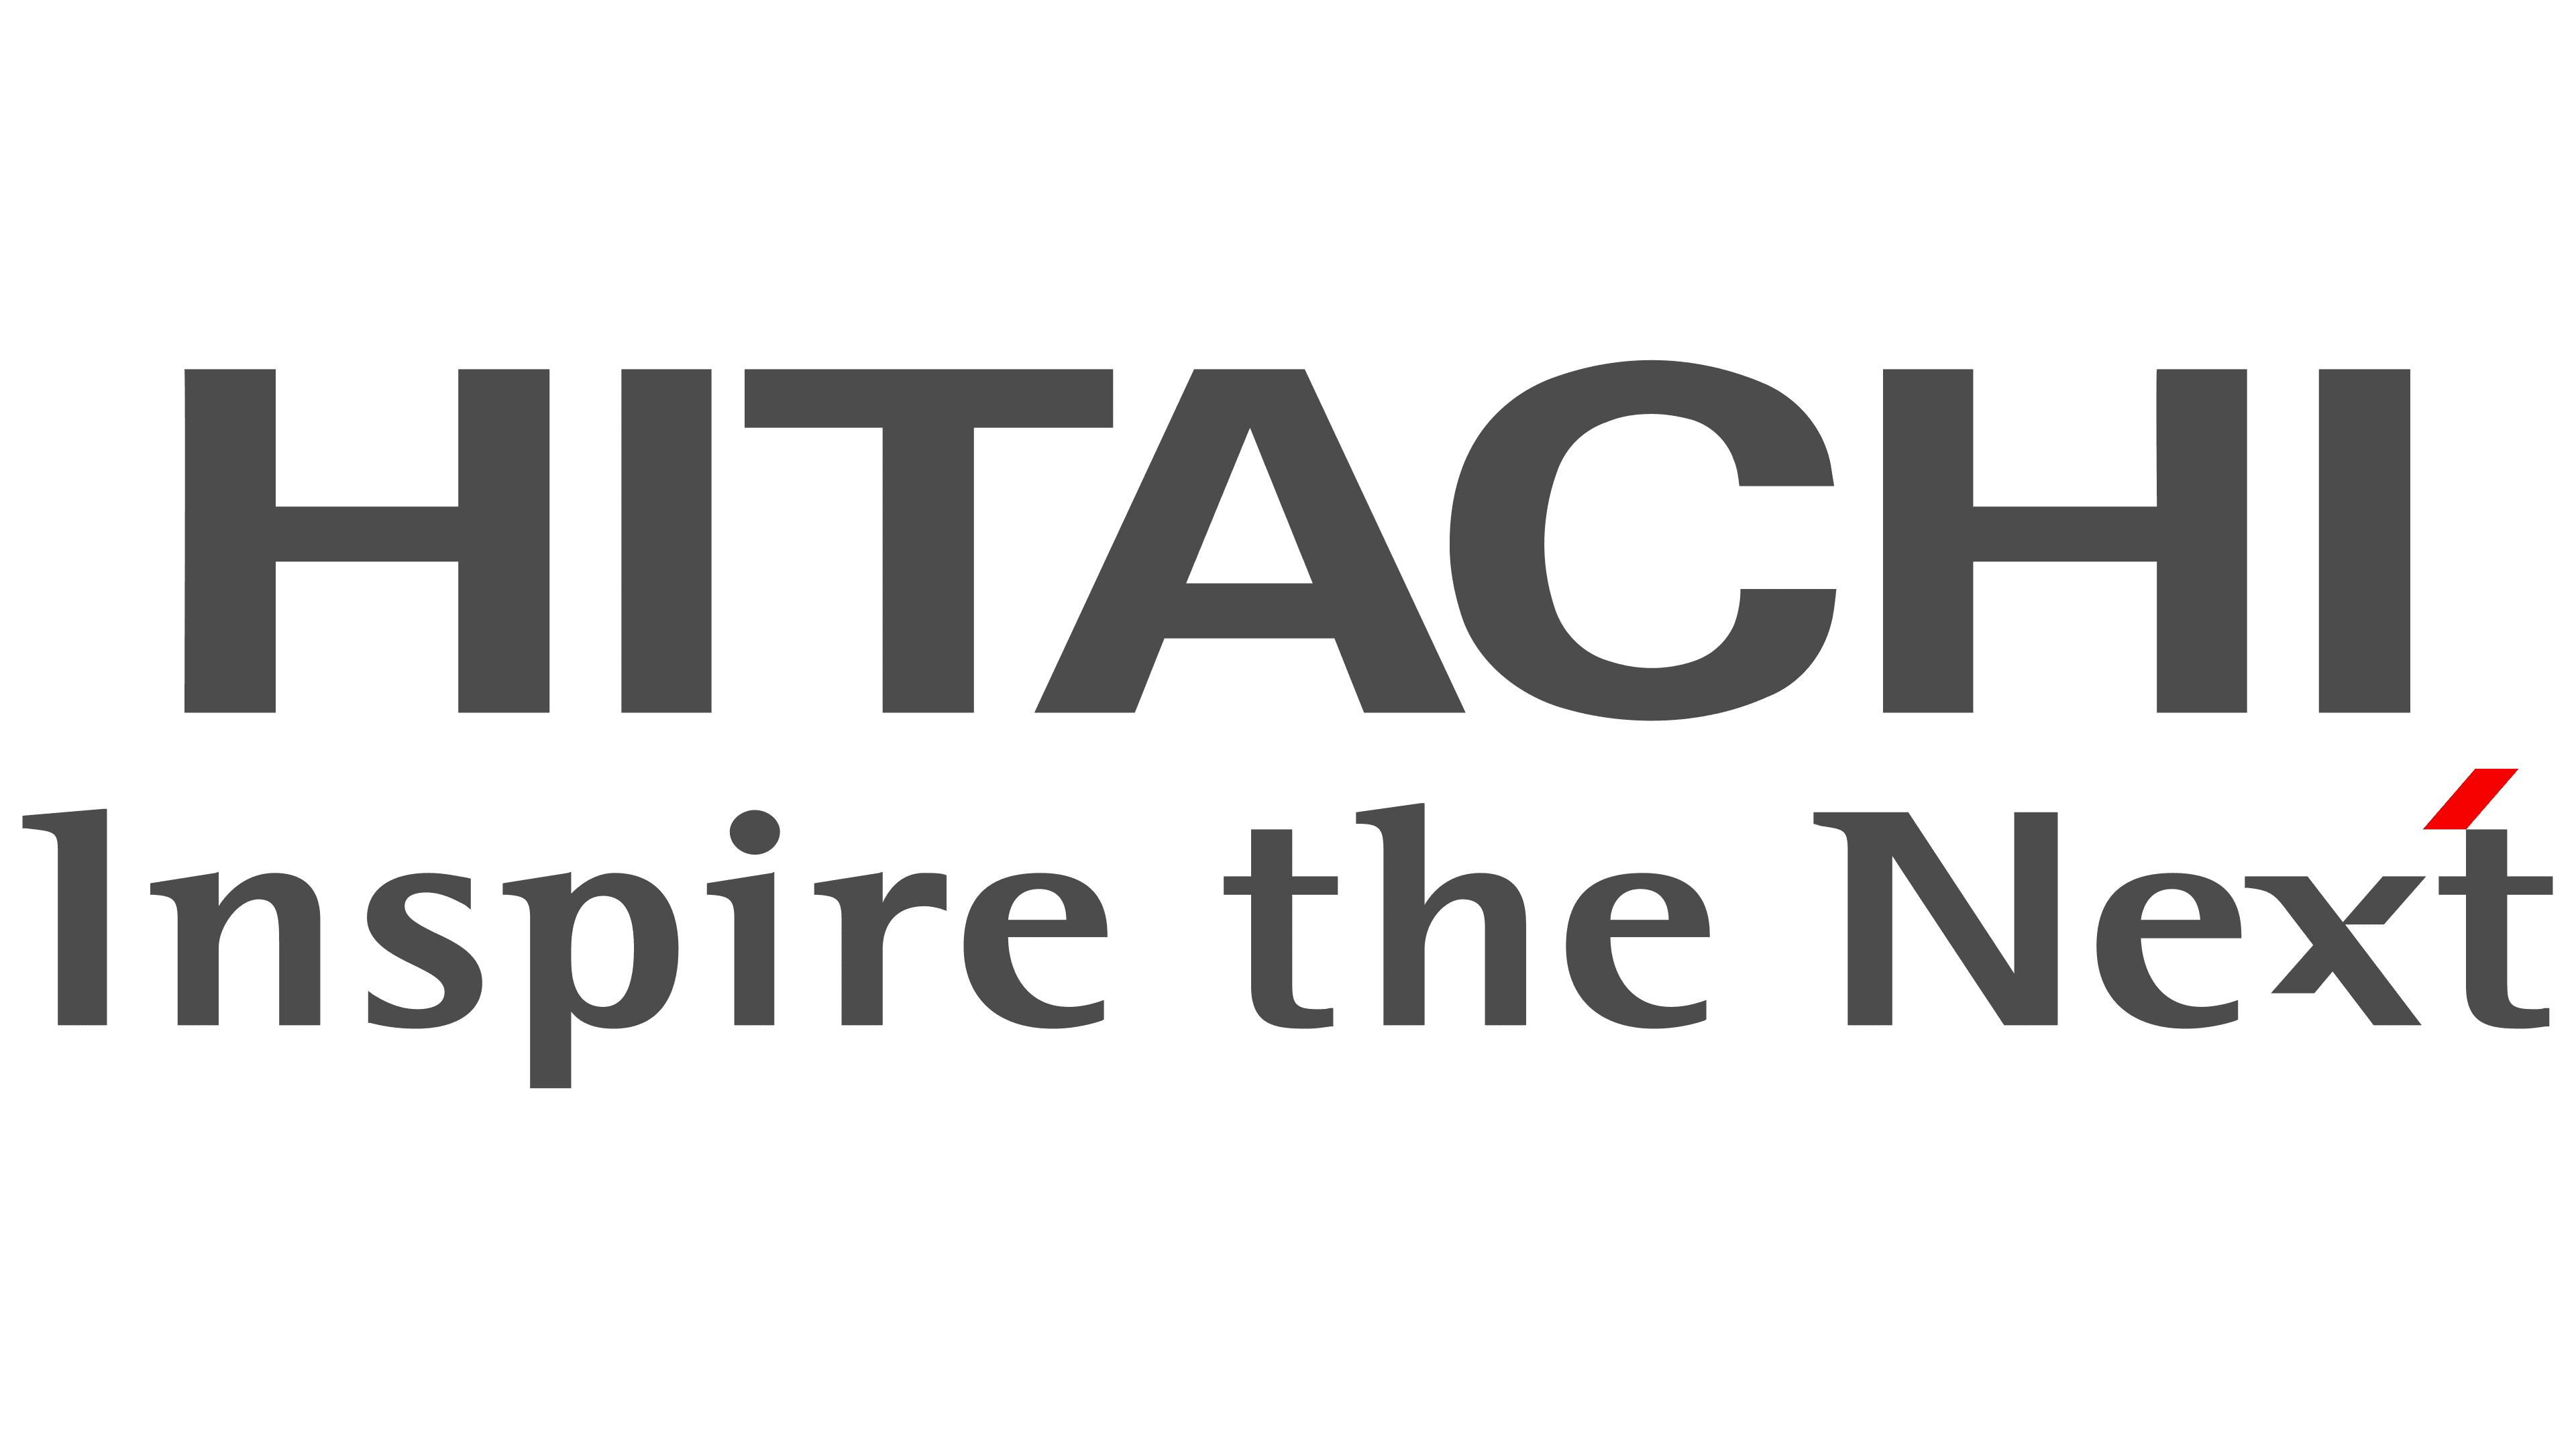 Hitachi Spark Plug connector grease